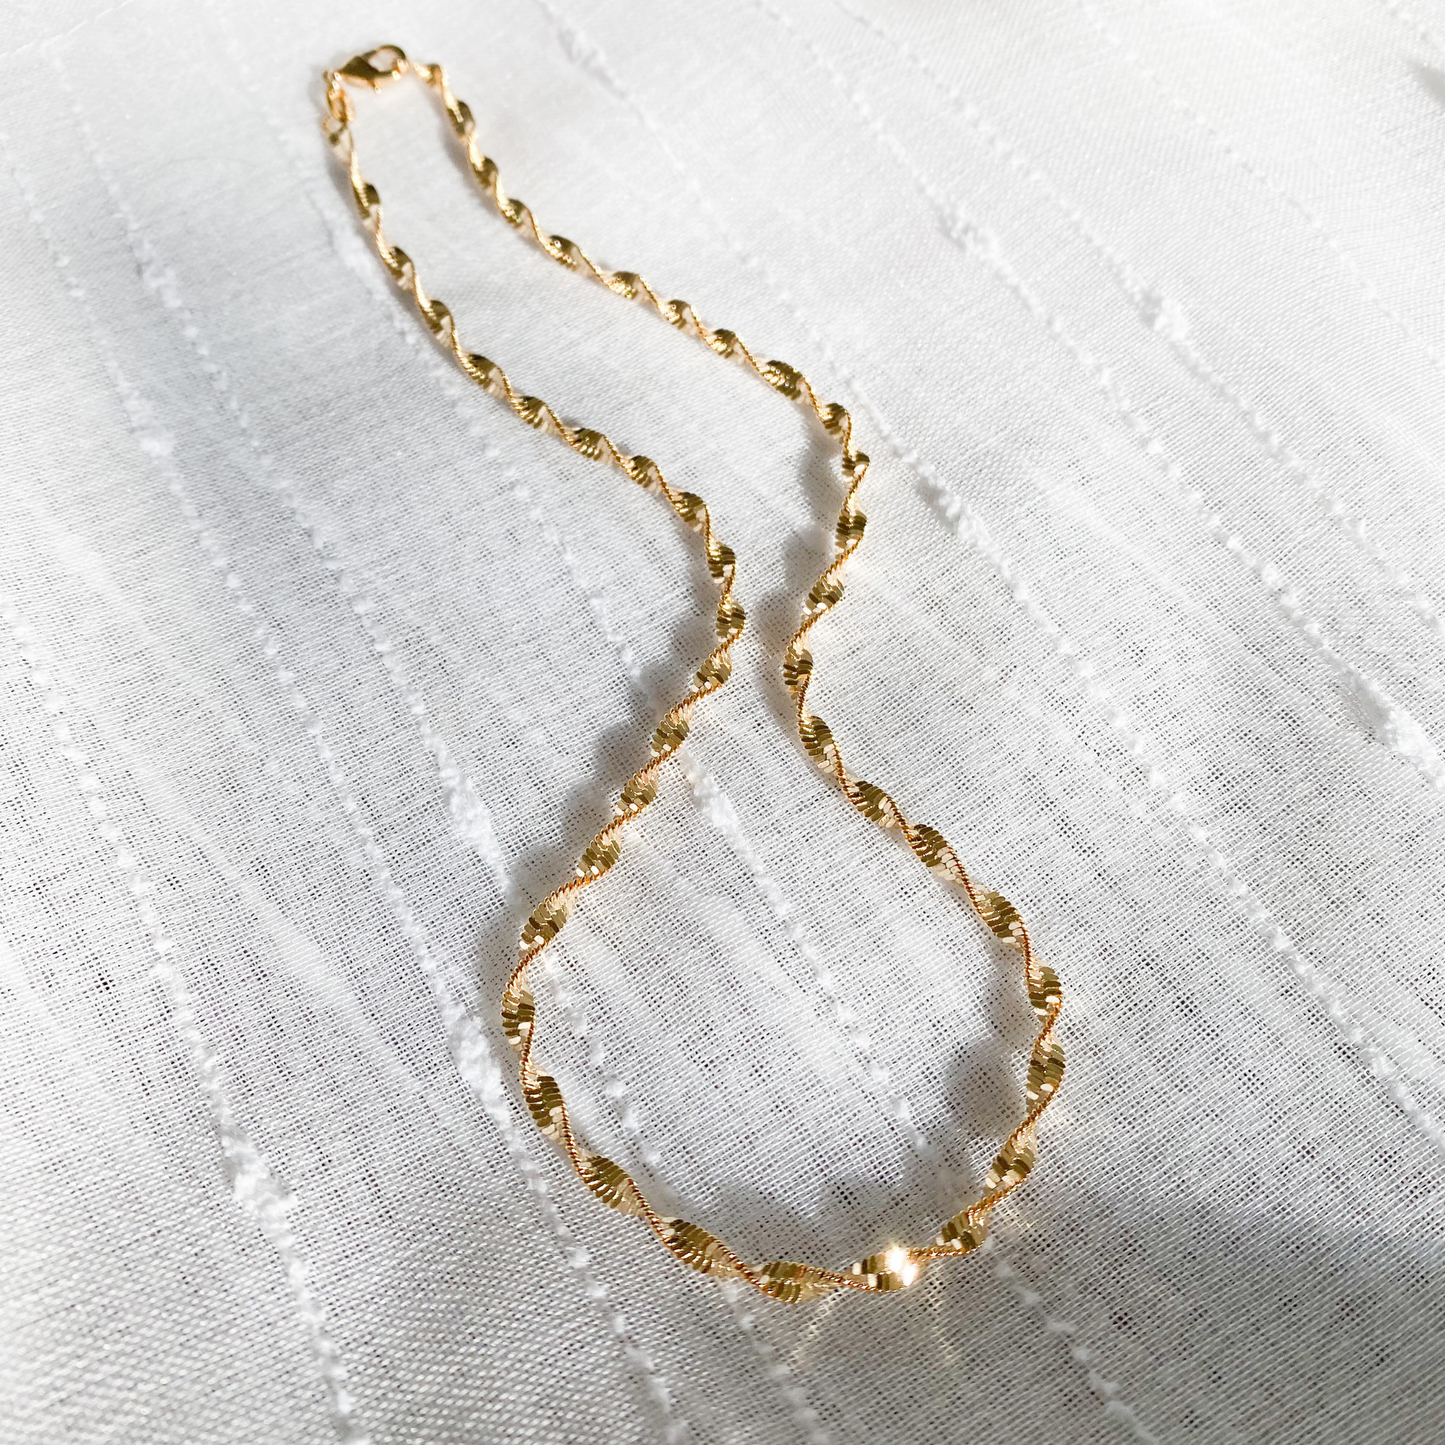 Ridged Spiral Necklace, White Gold